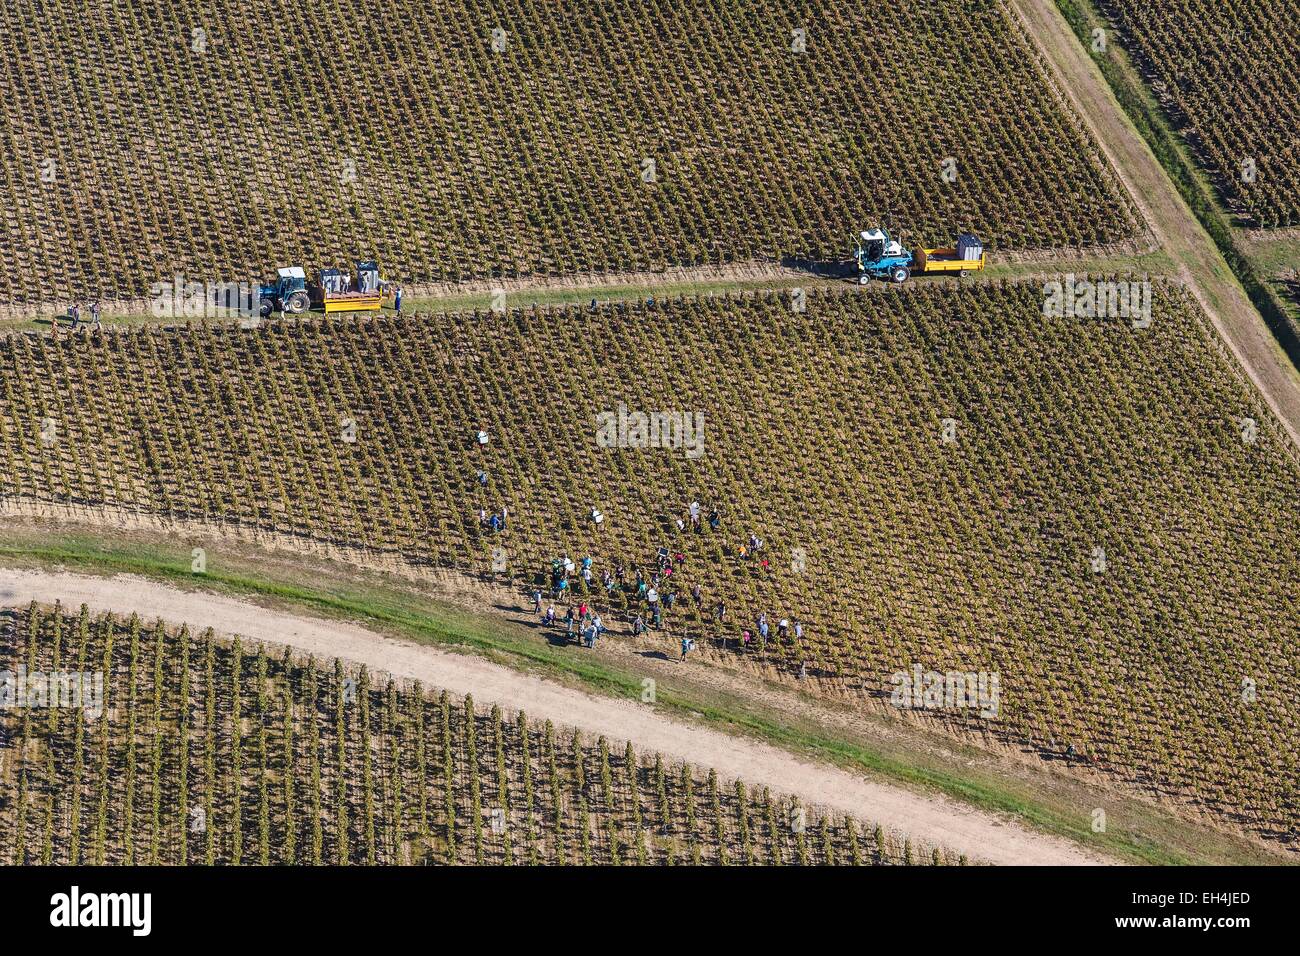 France, Gironde, Saint Seurin de Cadourne, grape harvesting in the Haut Medoc vineyards (aerial view) Stock Photo